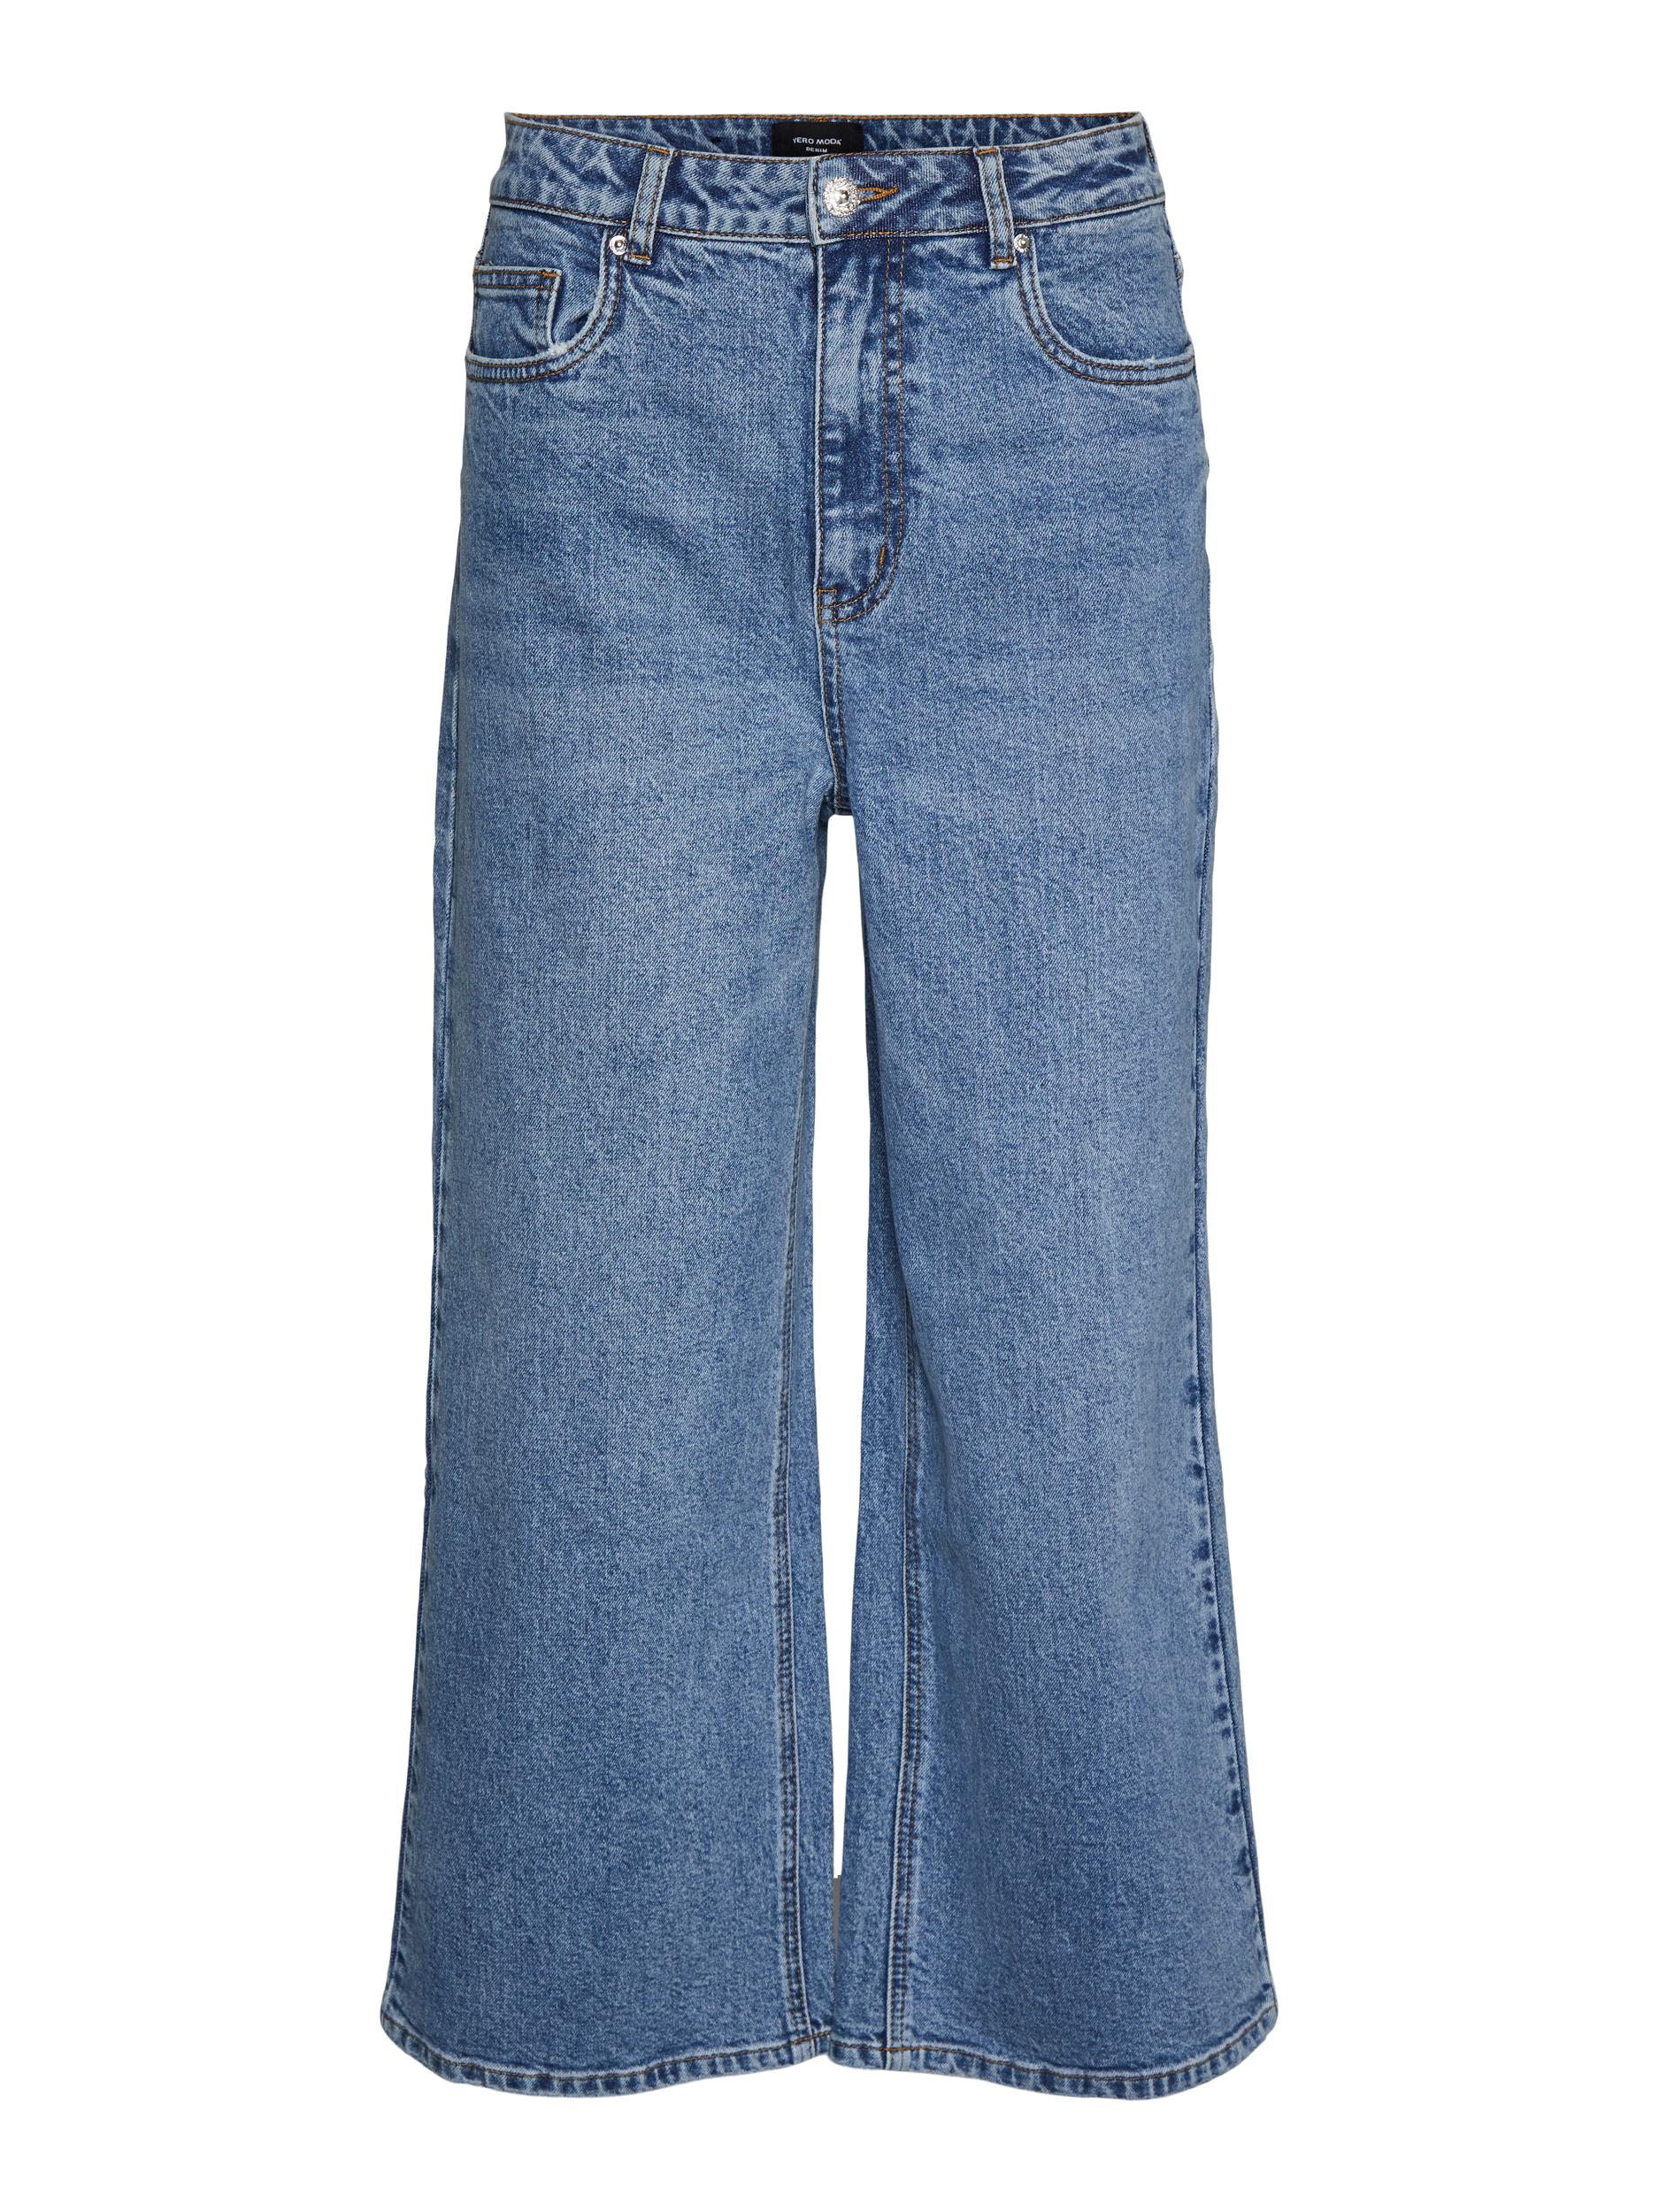 Vero Moda Kathy Jeans, Light Blue Denim, W33/L32